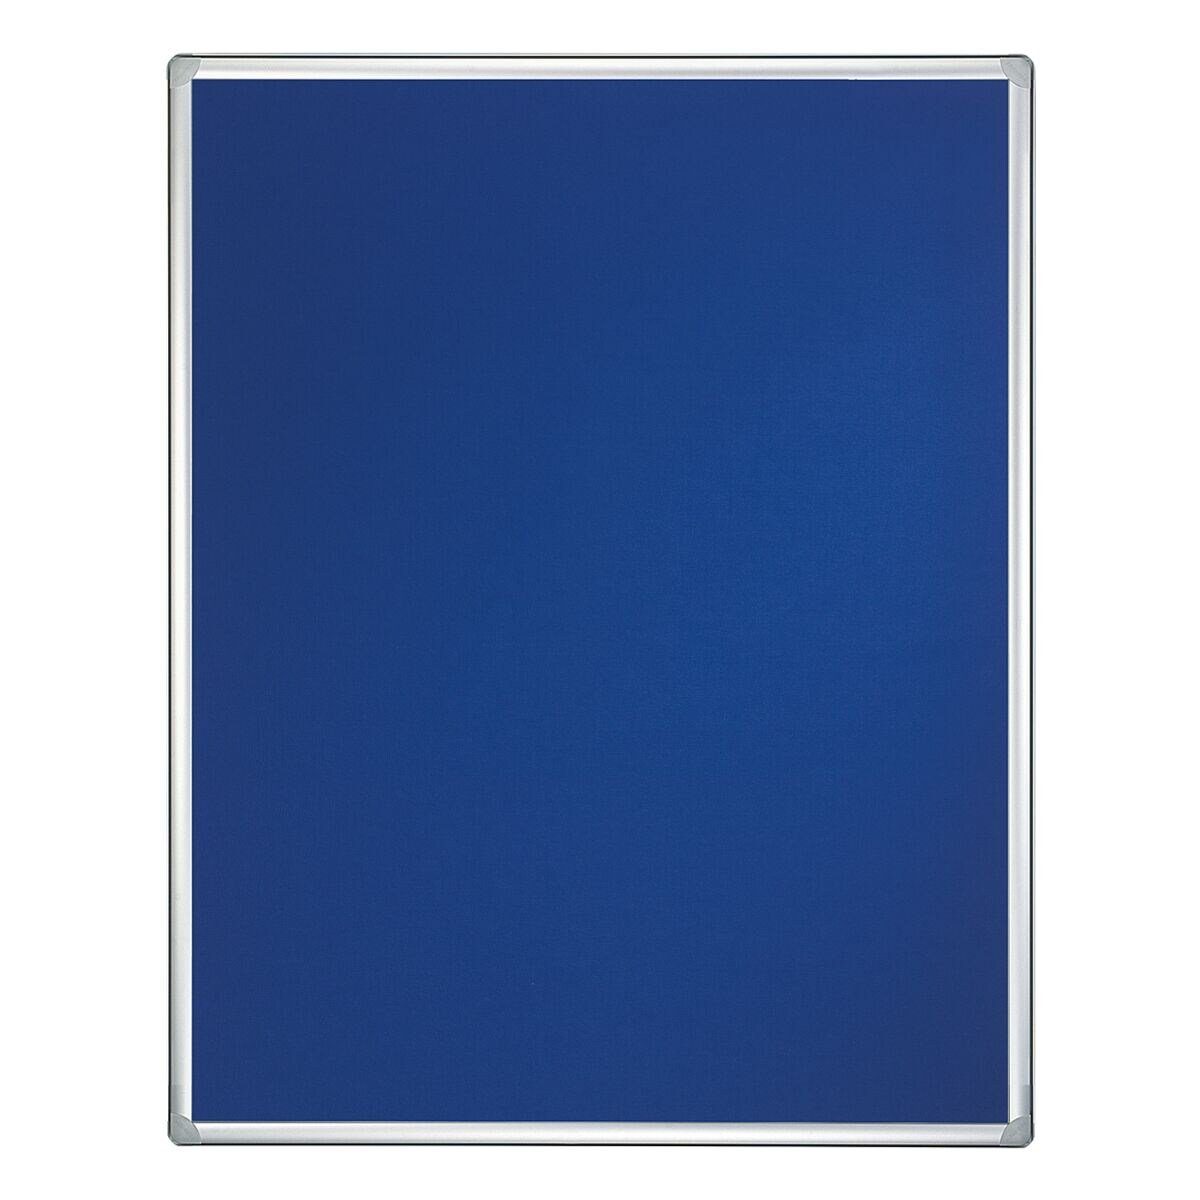 FRANKEN Pinnwand Pro SFD8014, nutzbar, silber Filz/ beidseitig blau lackiert